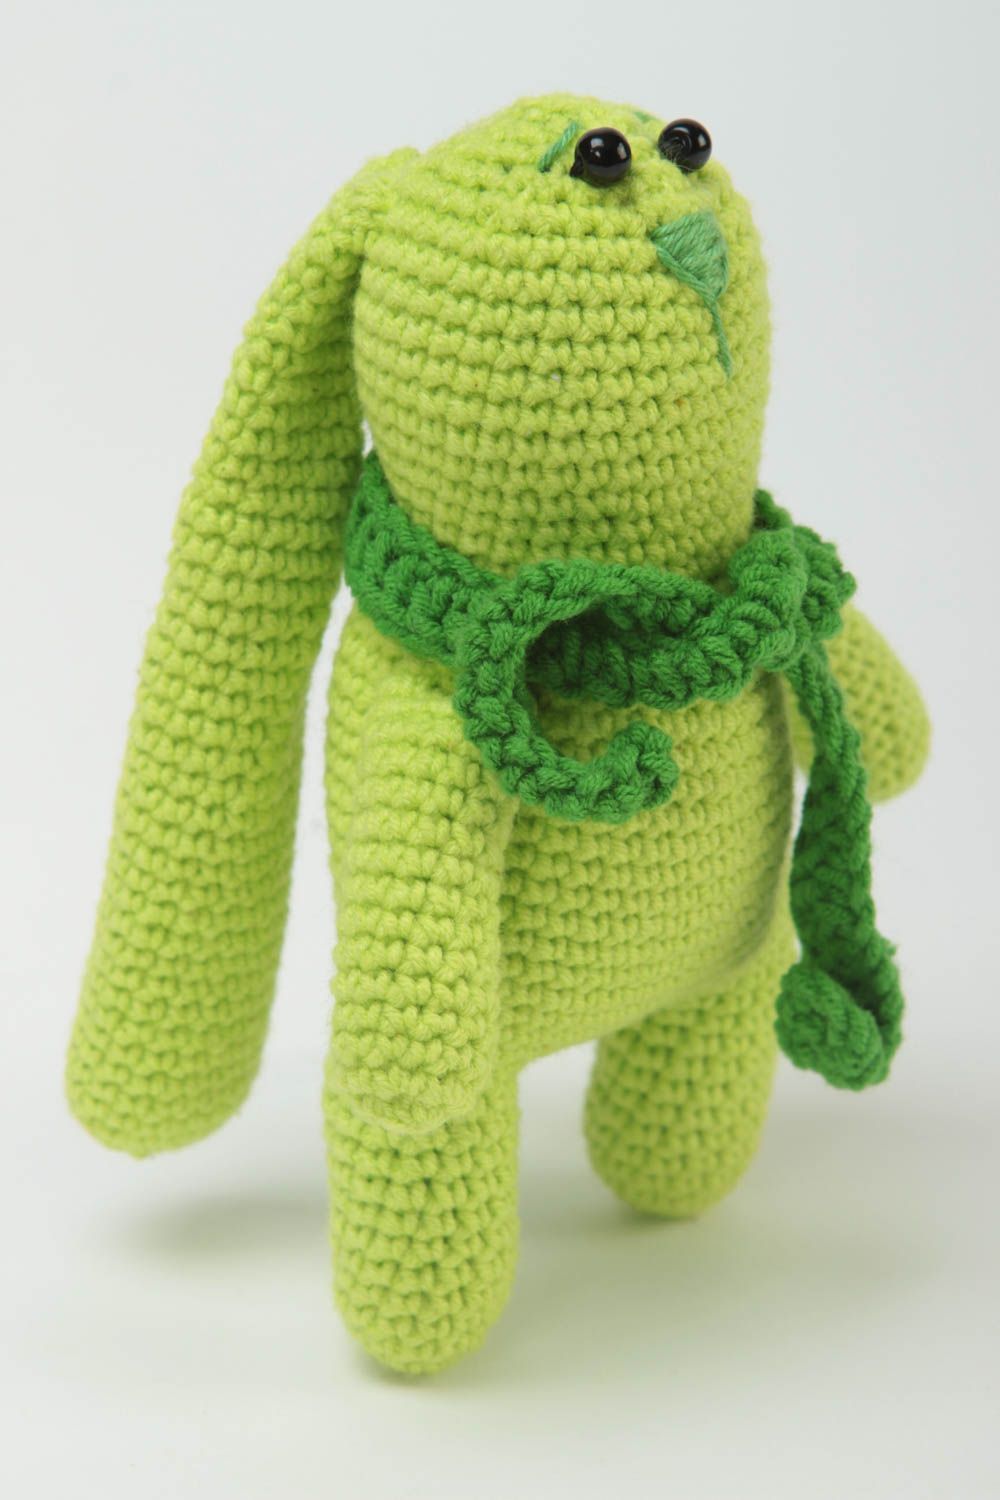 Unusual handmade crochet toy soft childrens toys nursery design gift ideas photo 2